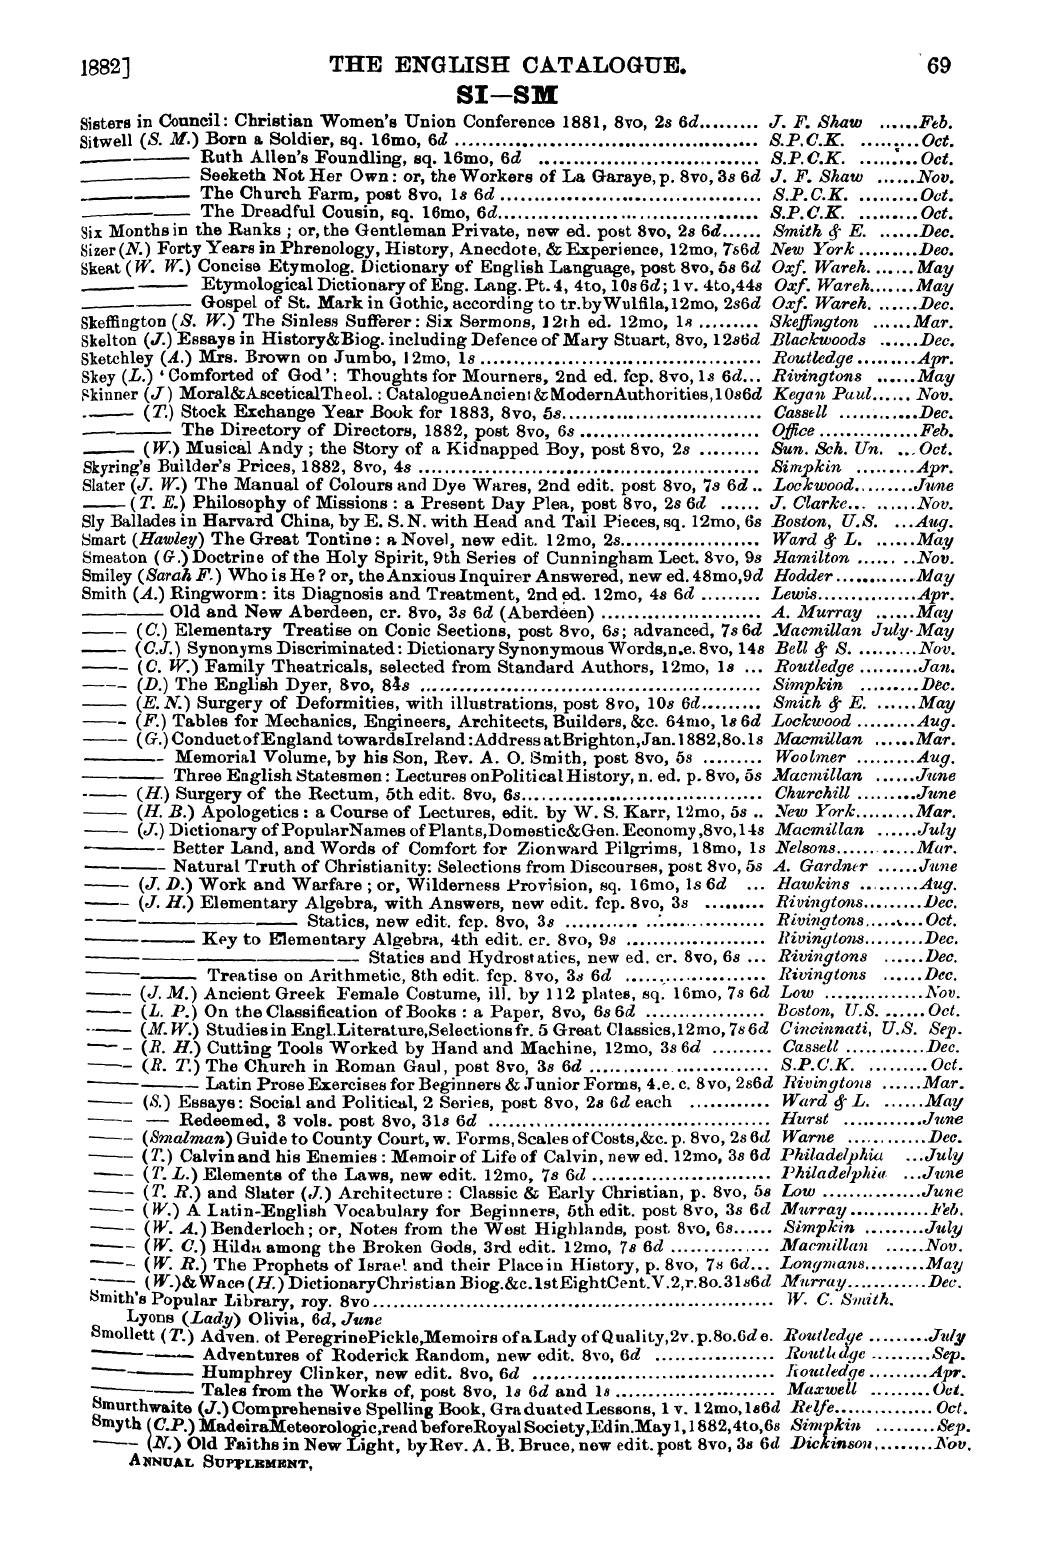 Publishers’ Circular (1880-1890): jS F Y, 1st edition: 71